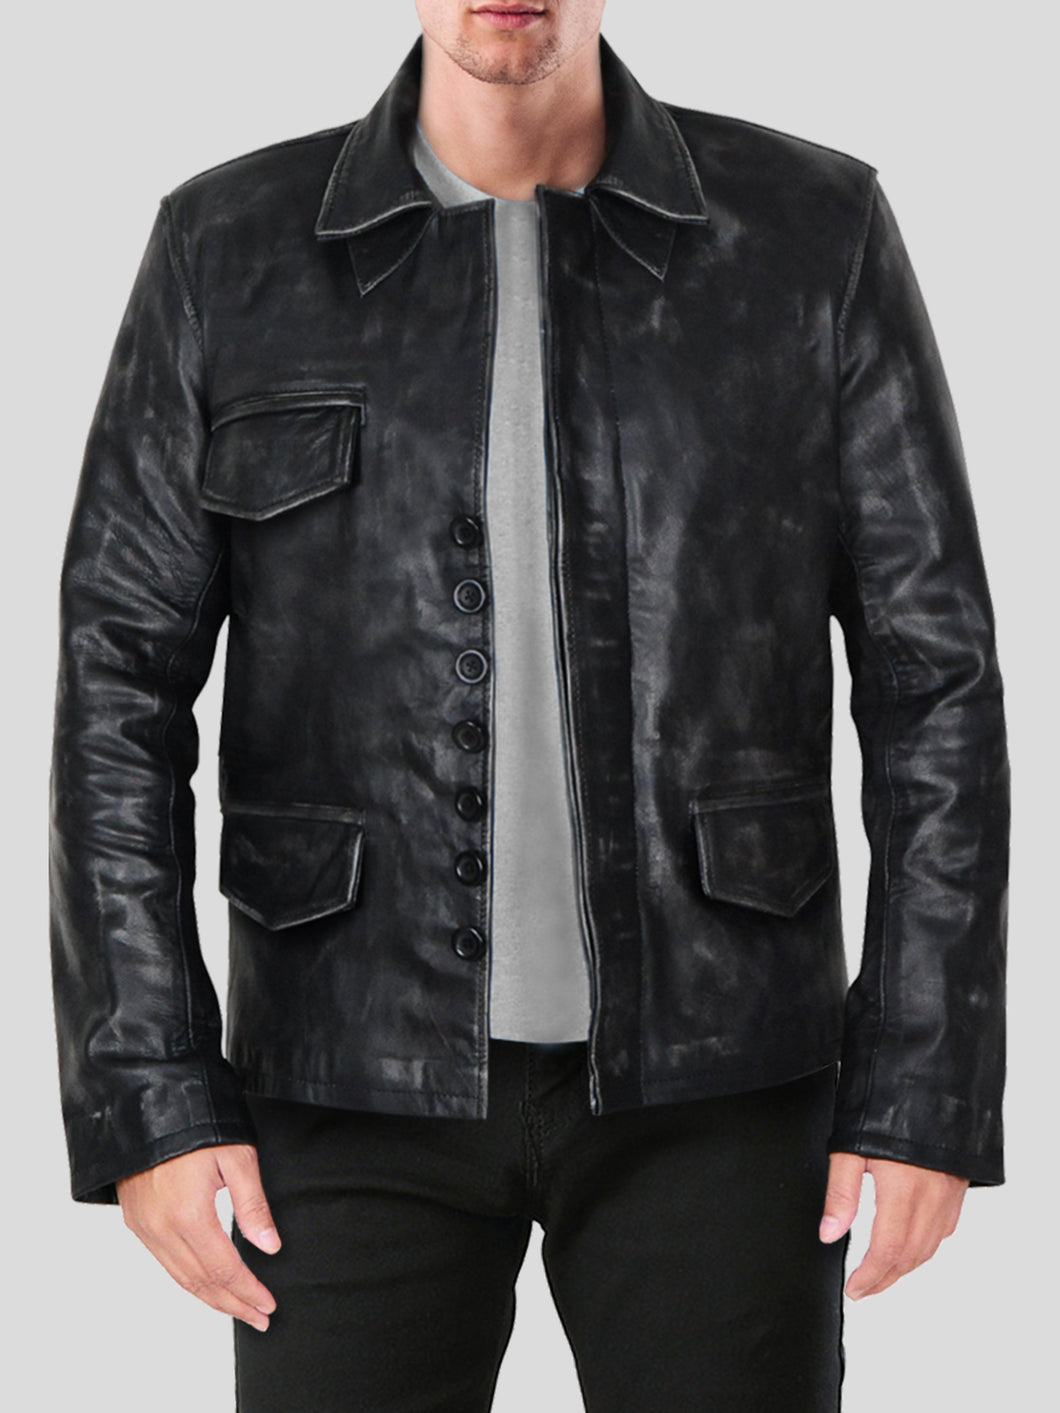 Men's Black Distressed Leather Jacket - Boneshia.com